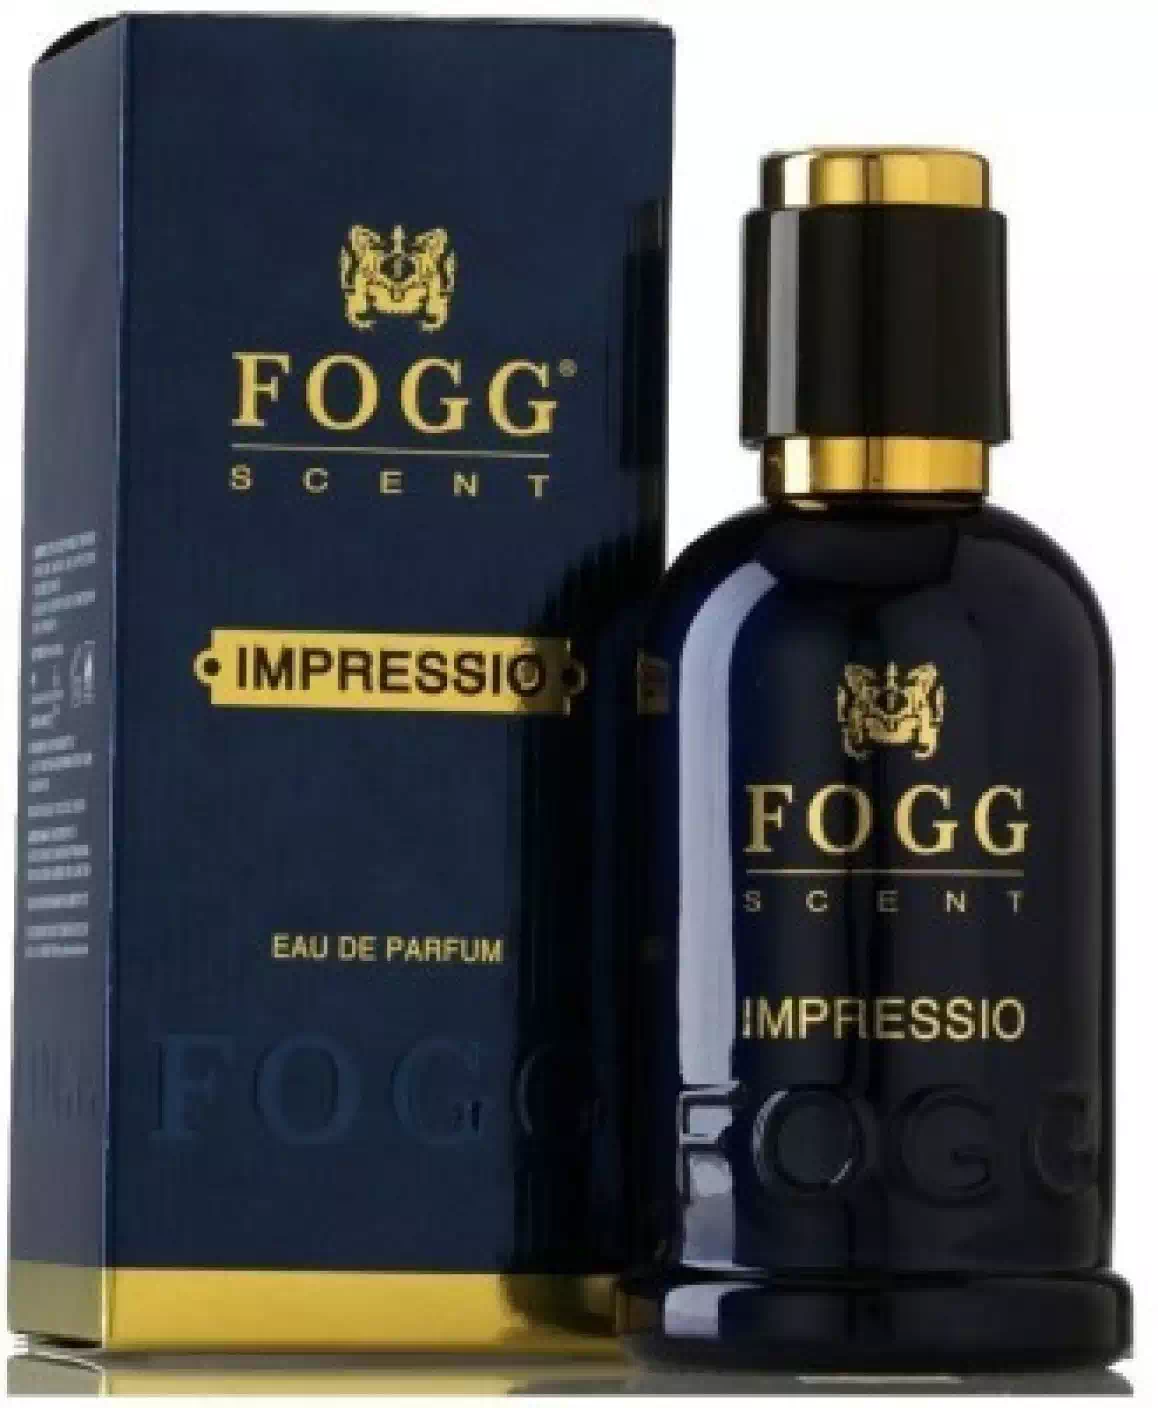 FOGG SCENT IMPRESSIO EAU DE PERFUME 100 ml